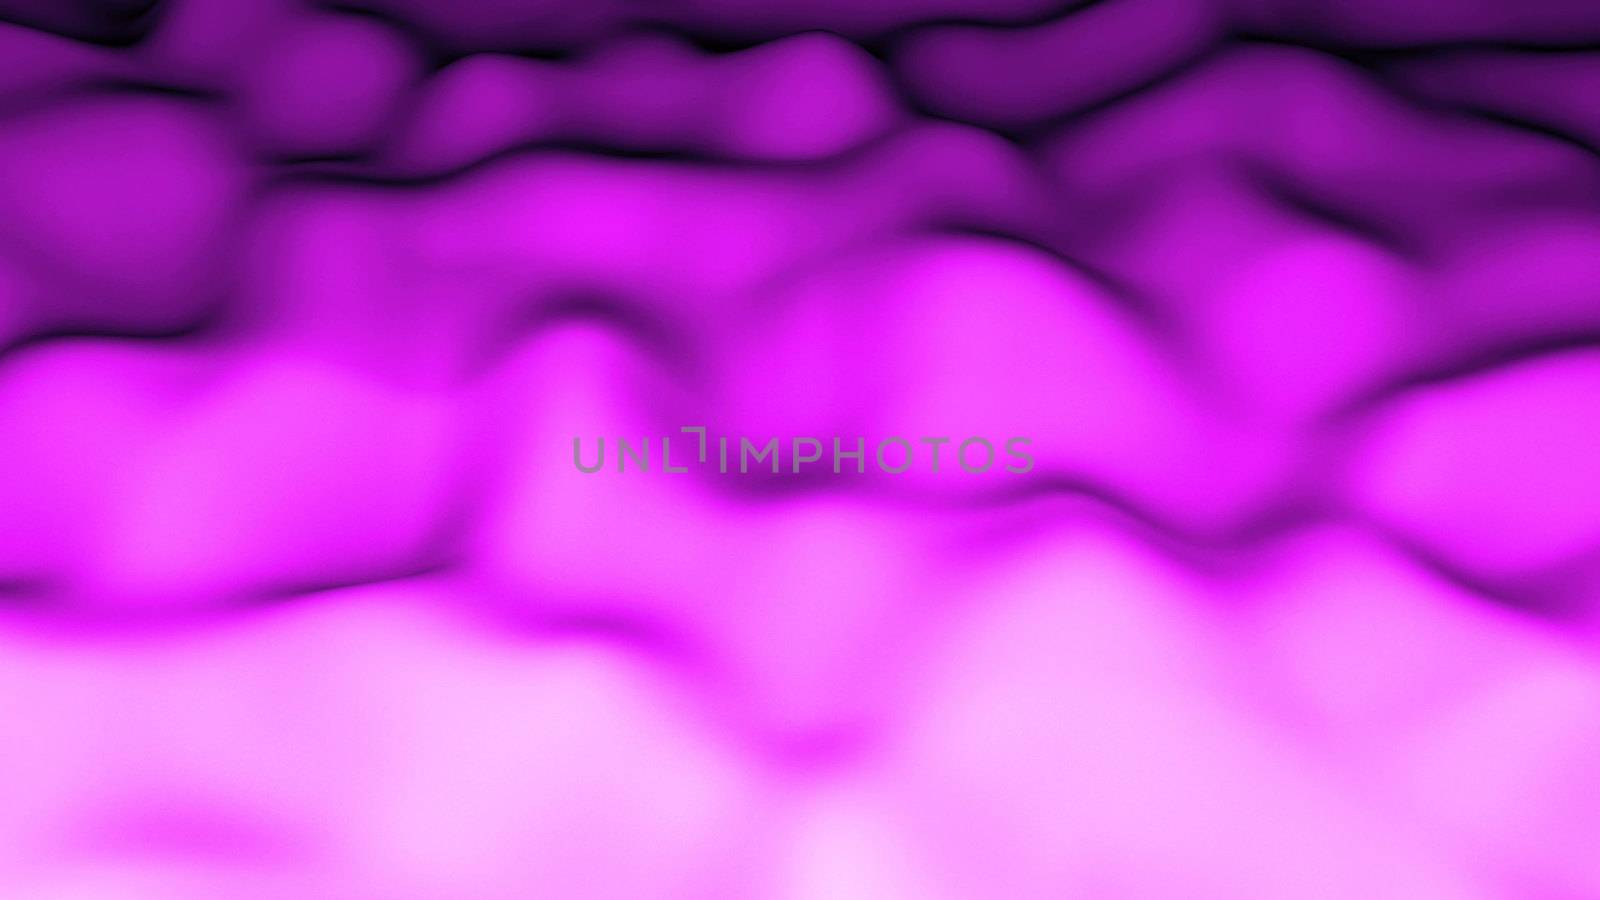 Abstract waves background. Digital illustration. 3d rendering